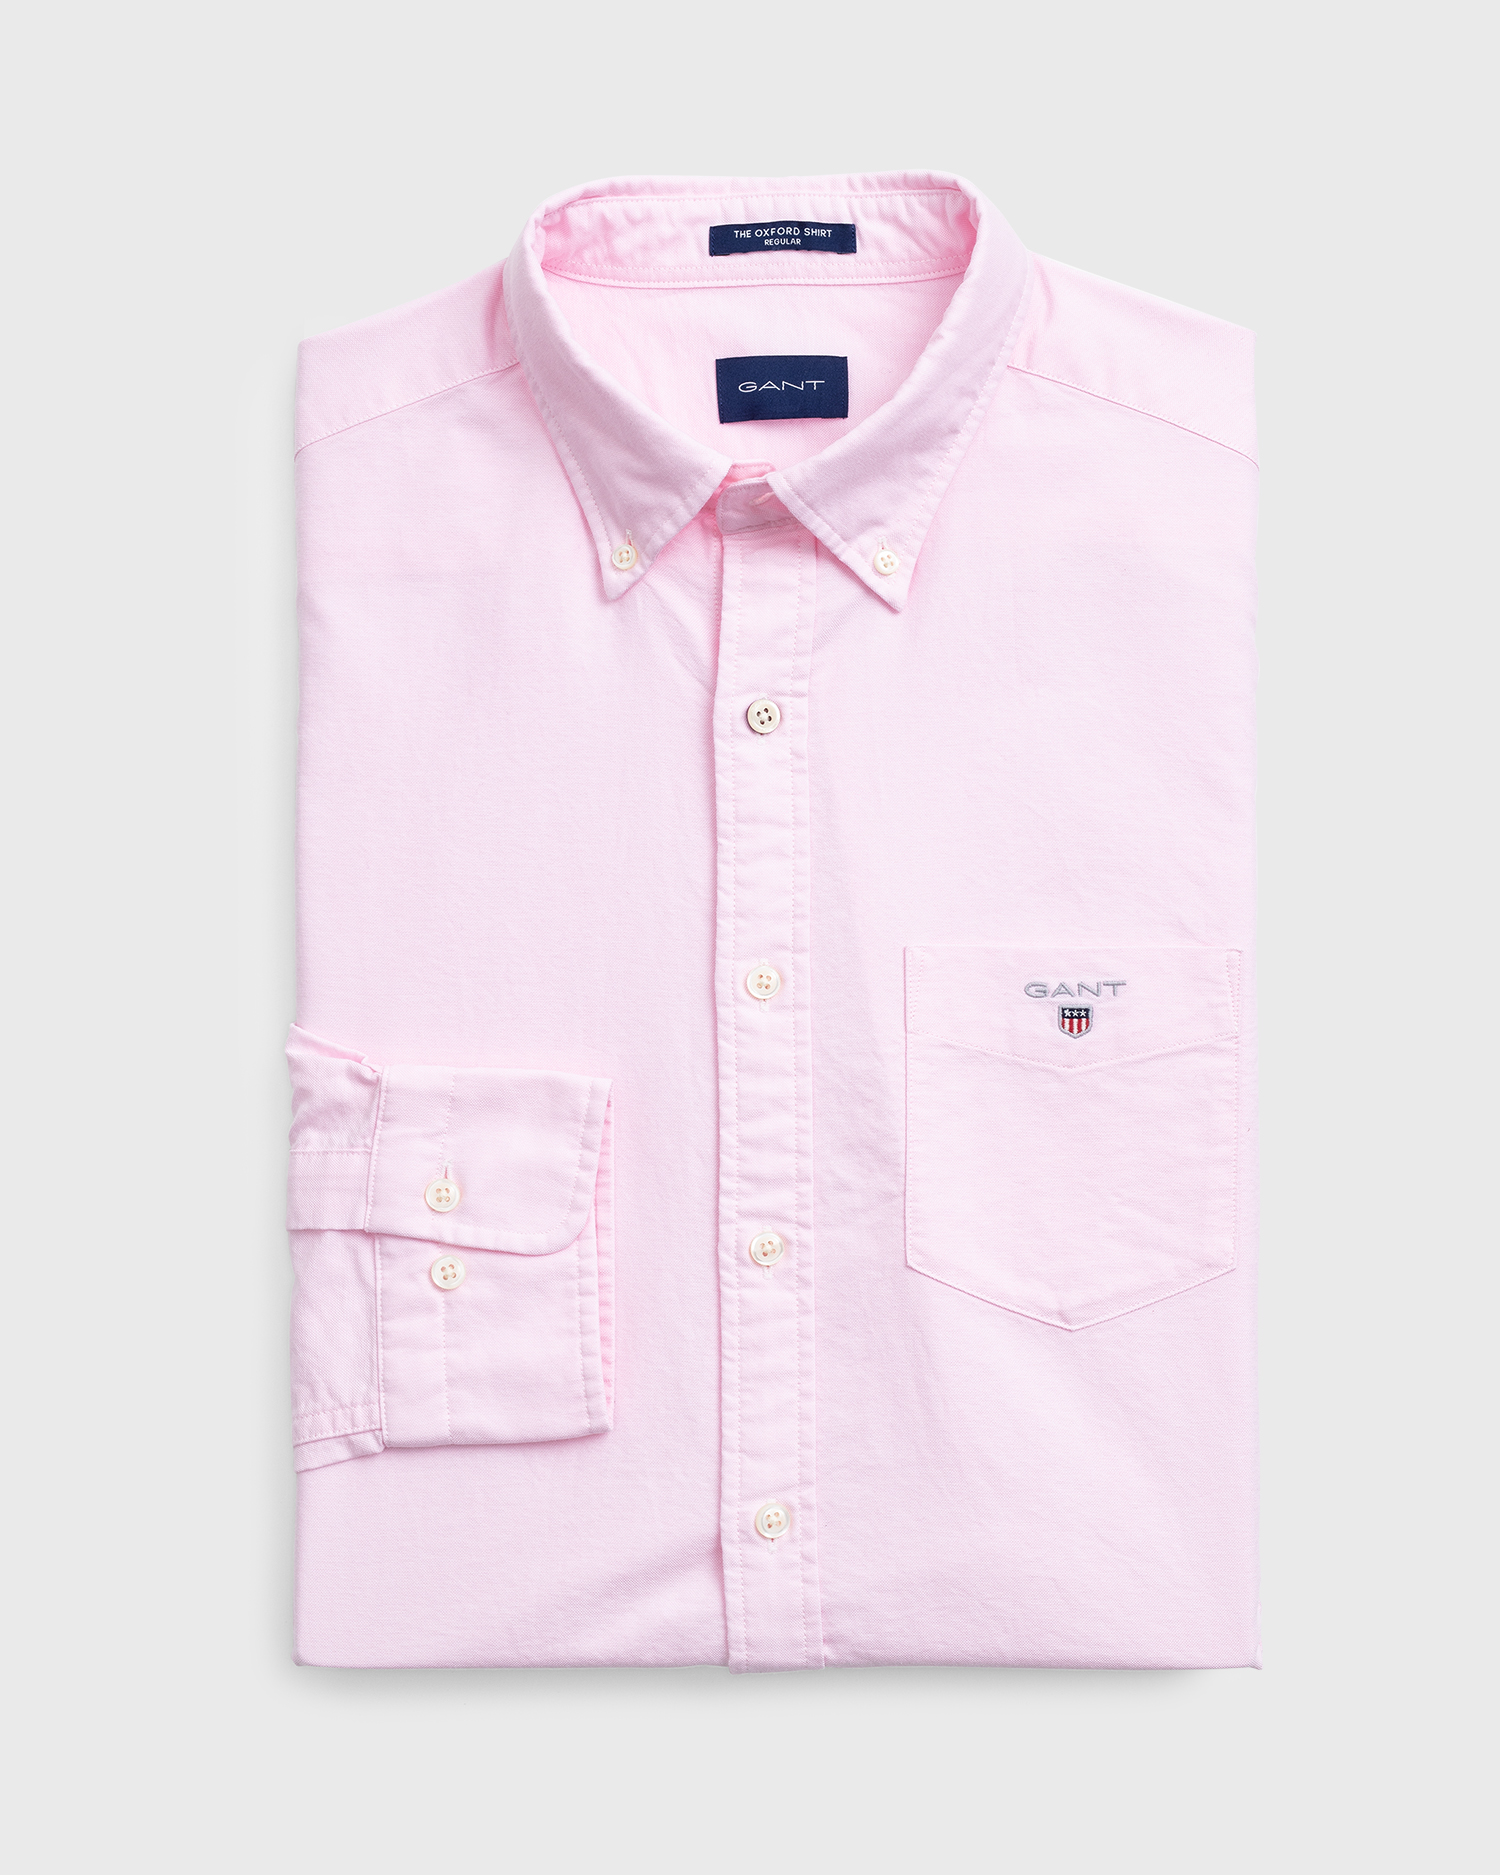 Gant Oxford Shirt - E&M Stores